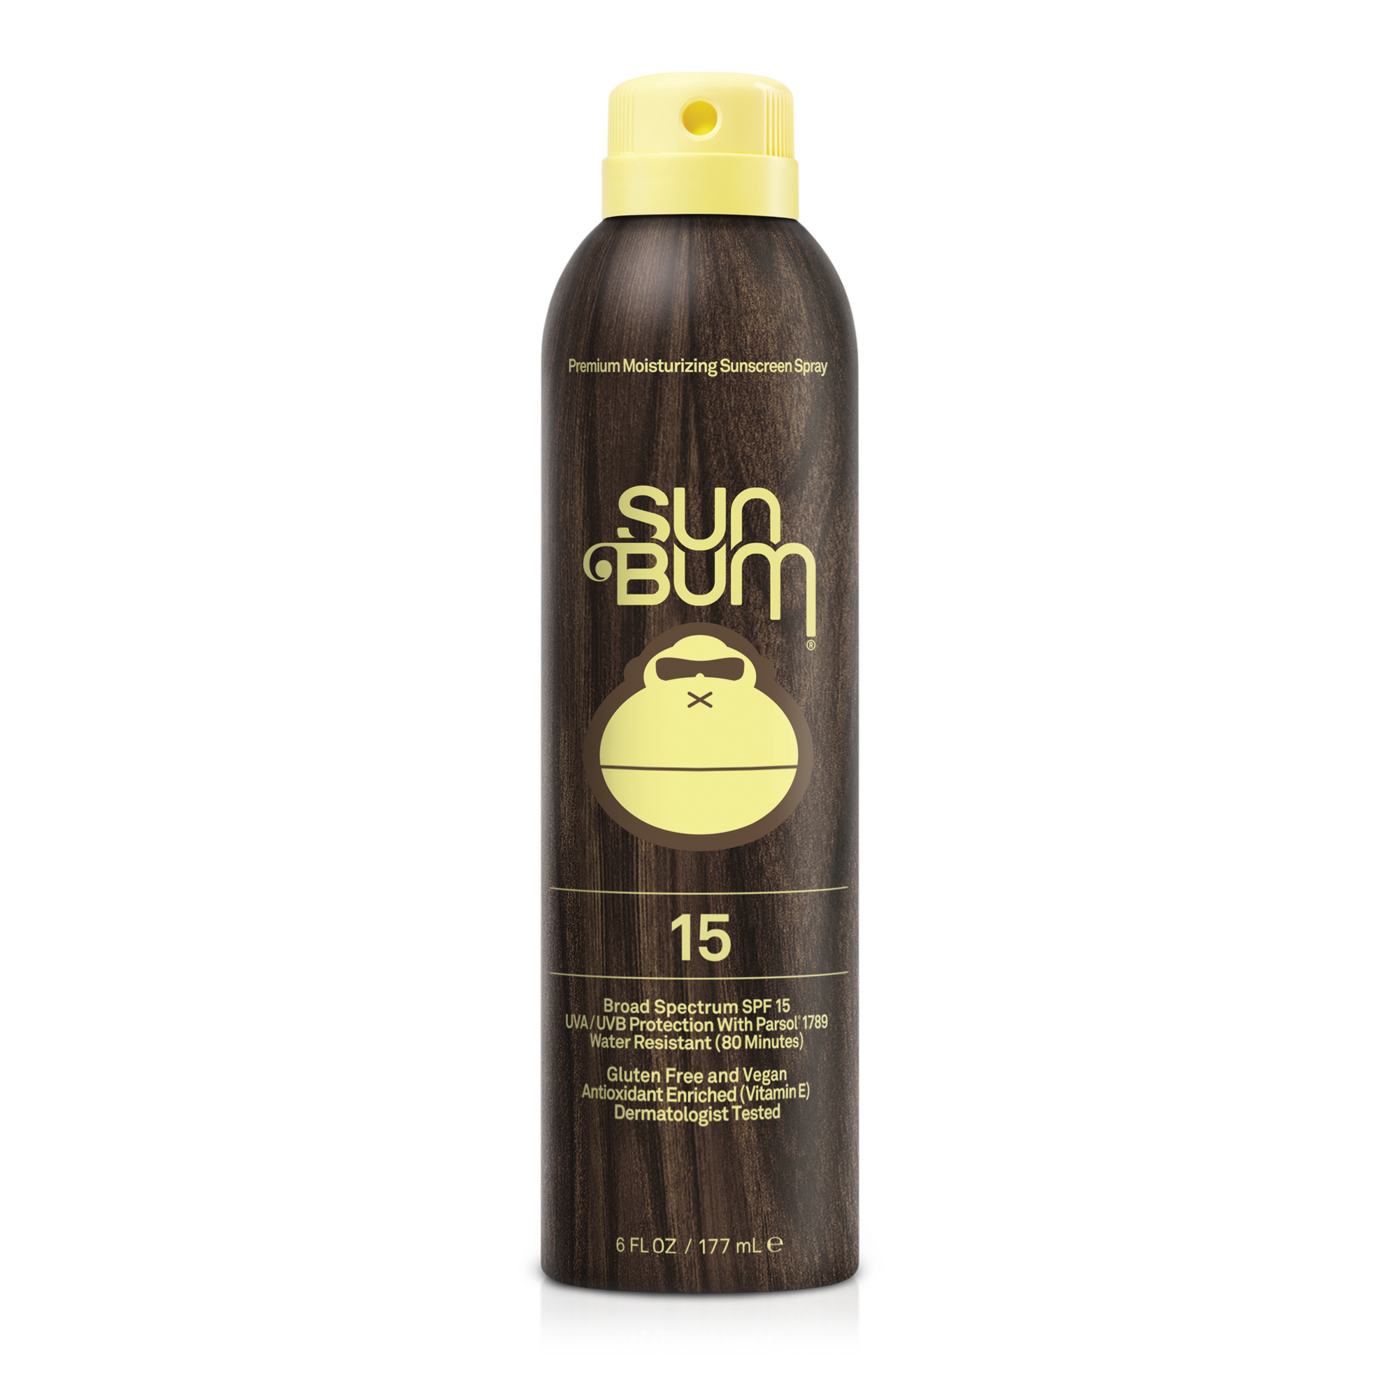 Original 6oz. Sunscreen Spray The Bikini Shoppe